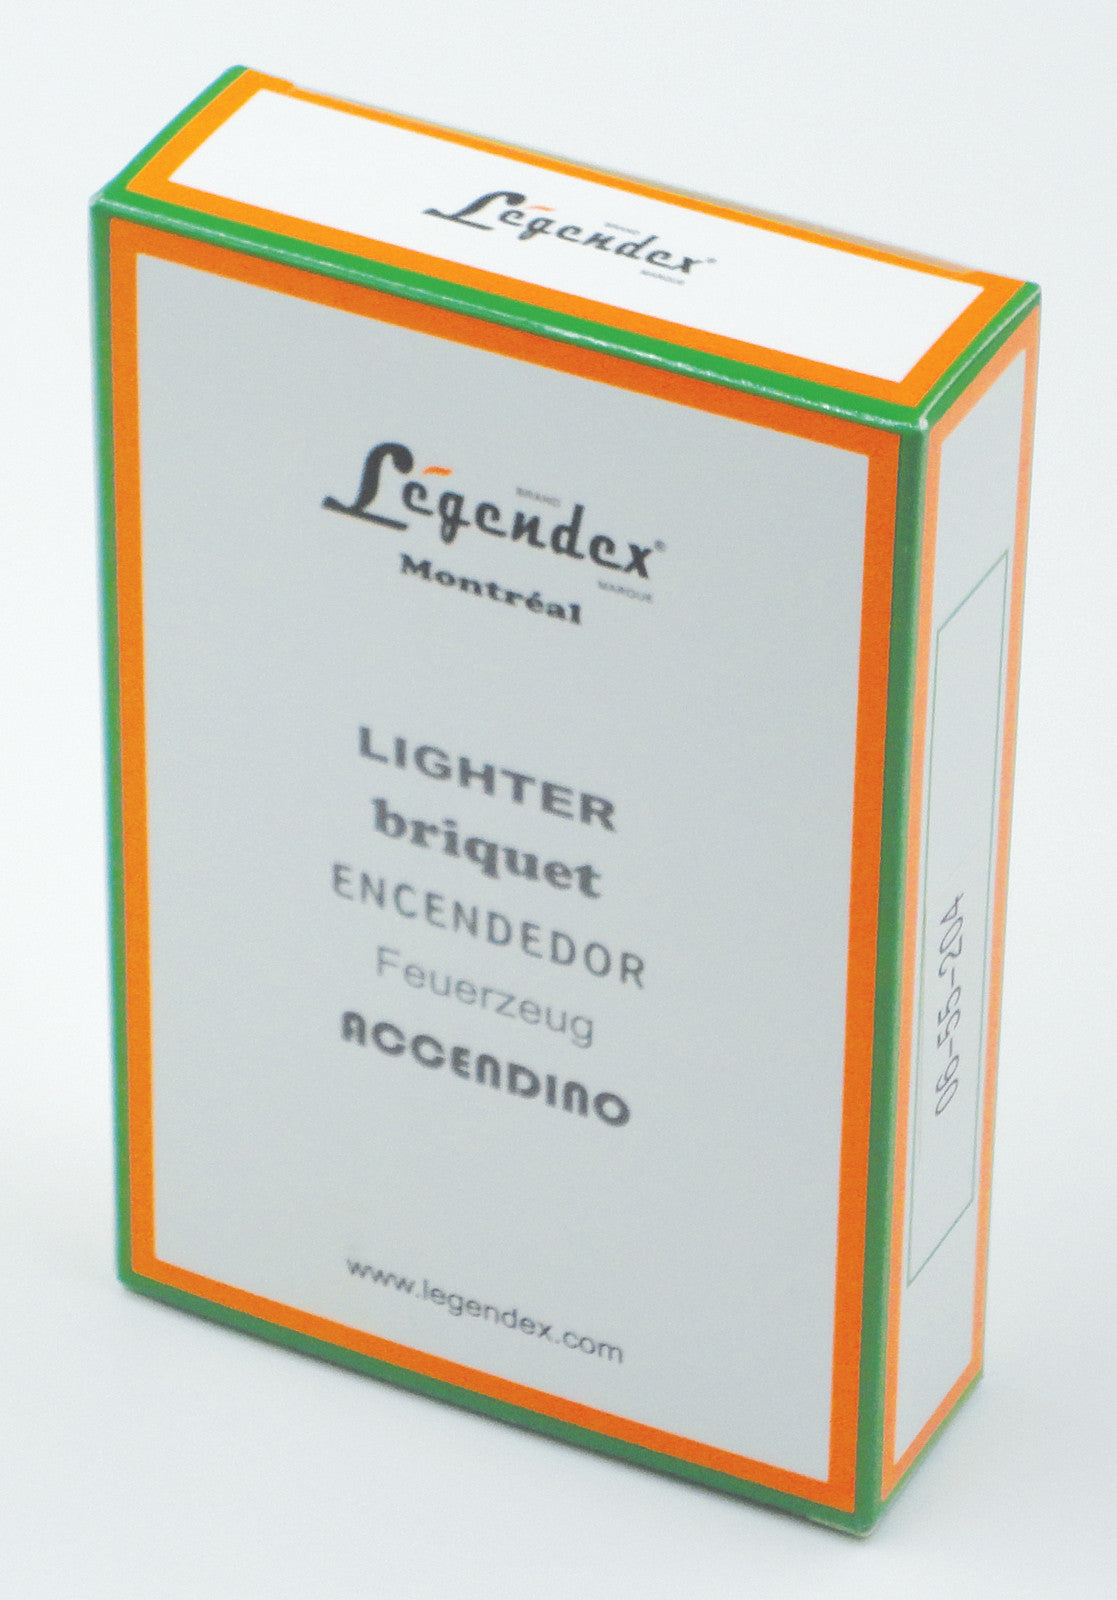 Legendex Climber Turbo Windproof Lighter 06-55-202 Gunmetal bright